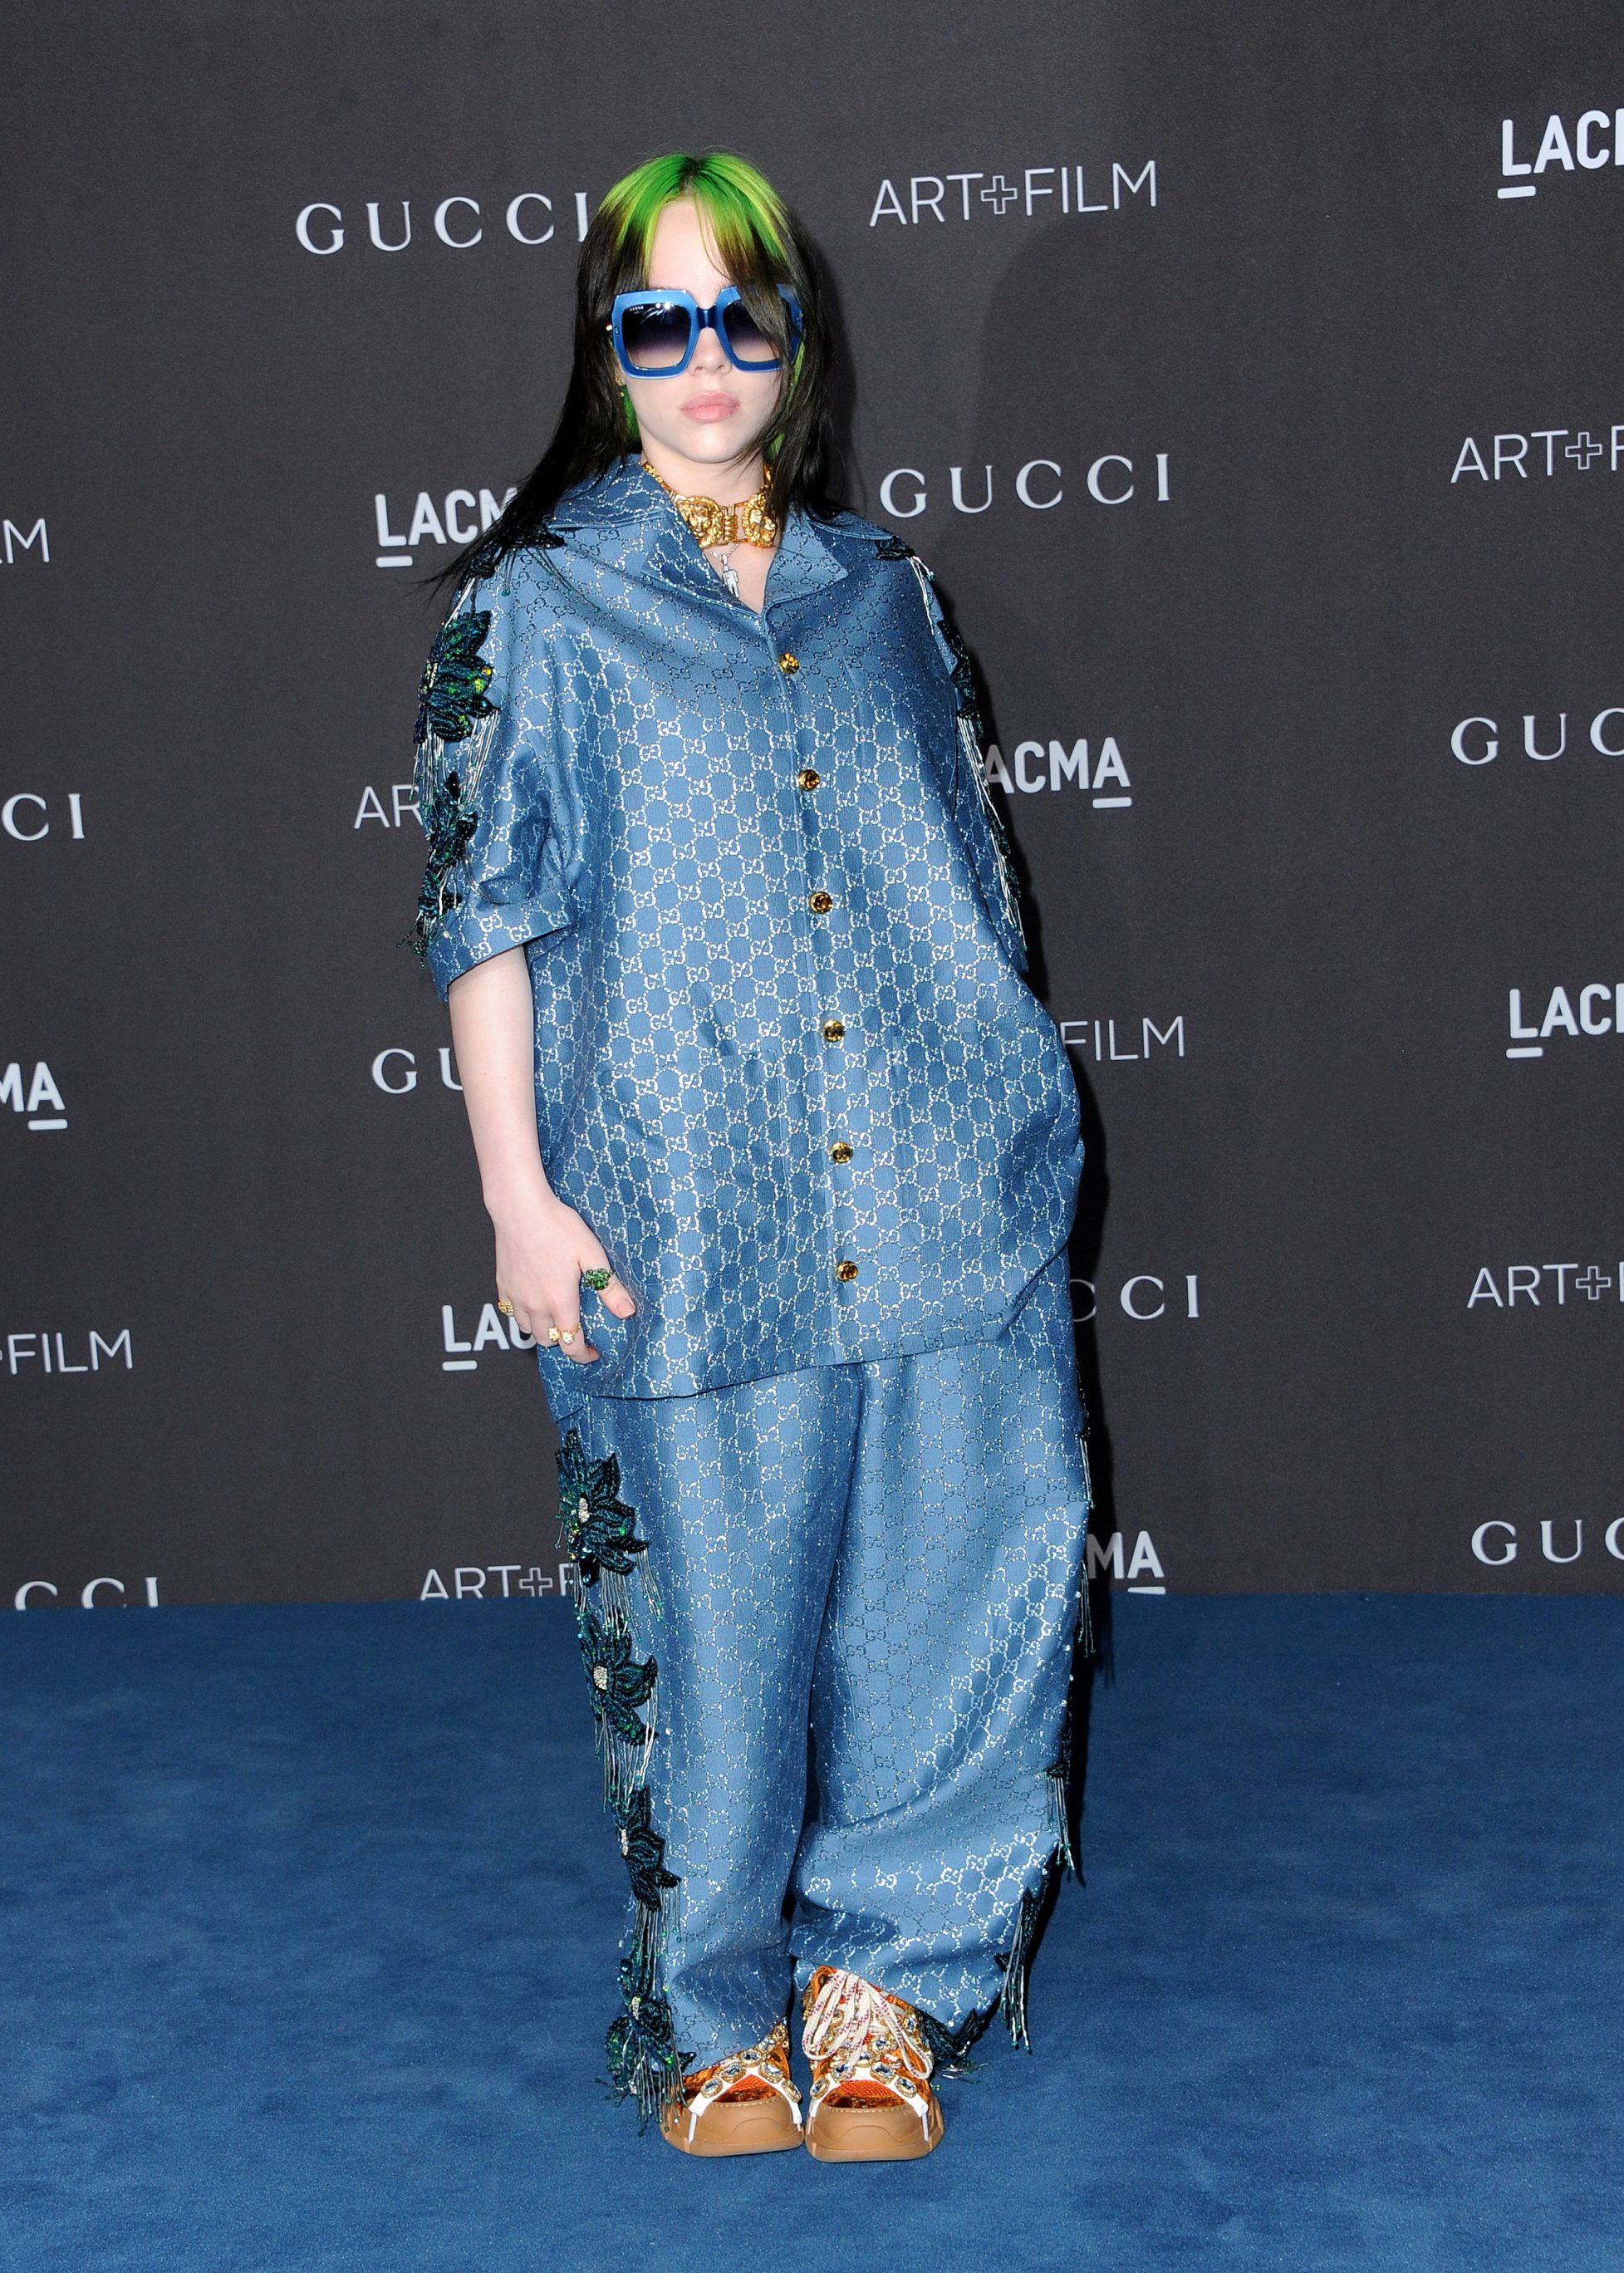 Lacma Art+Film Gala 2019 Outfit